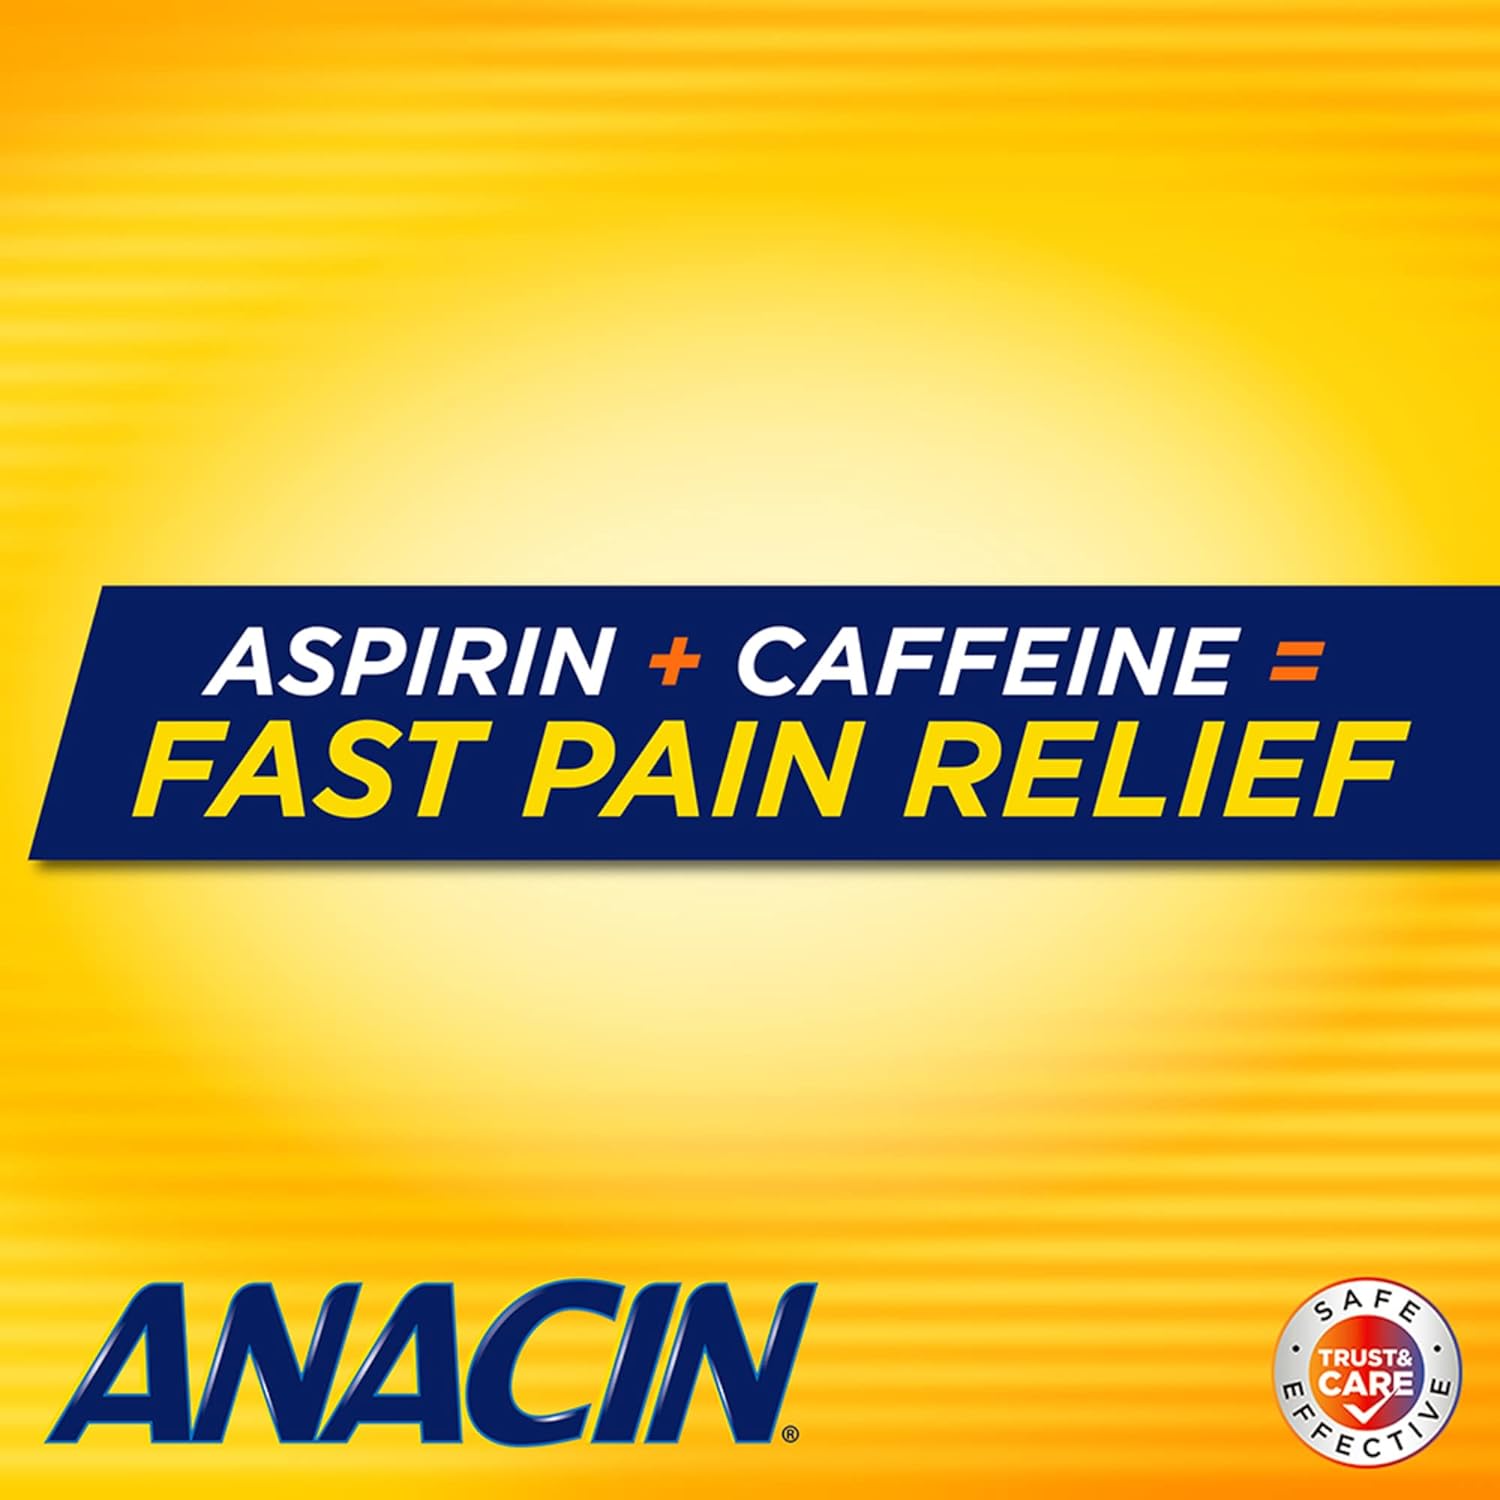 Anacin Fast Pain Relief, Aspirin + Caffeine Pain Reliever, 300 coated 